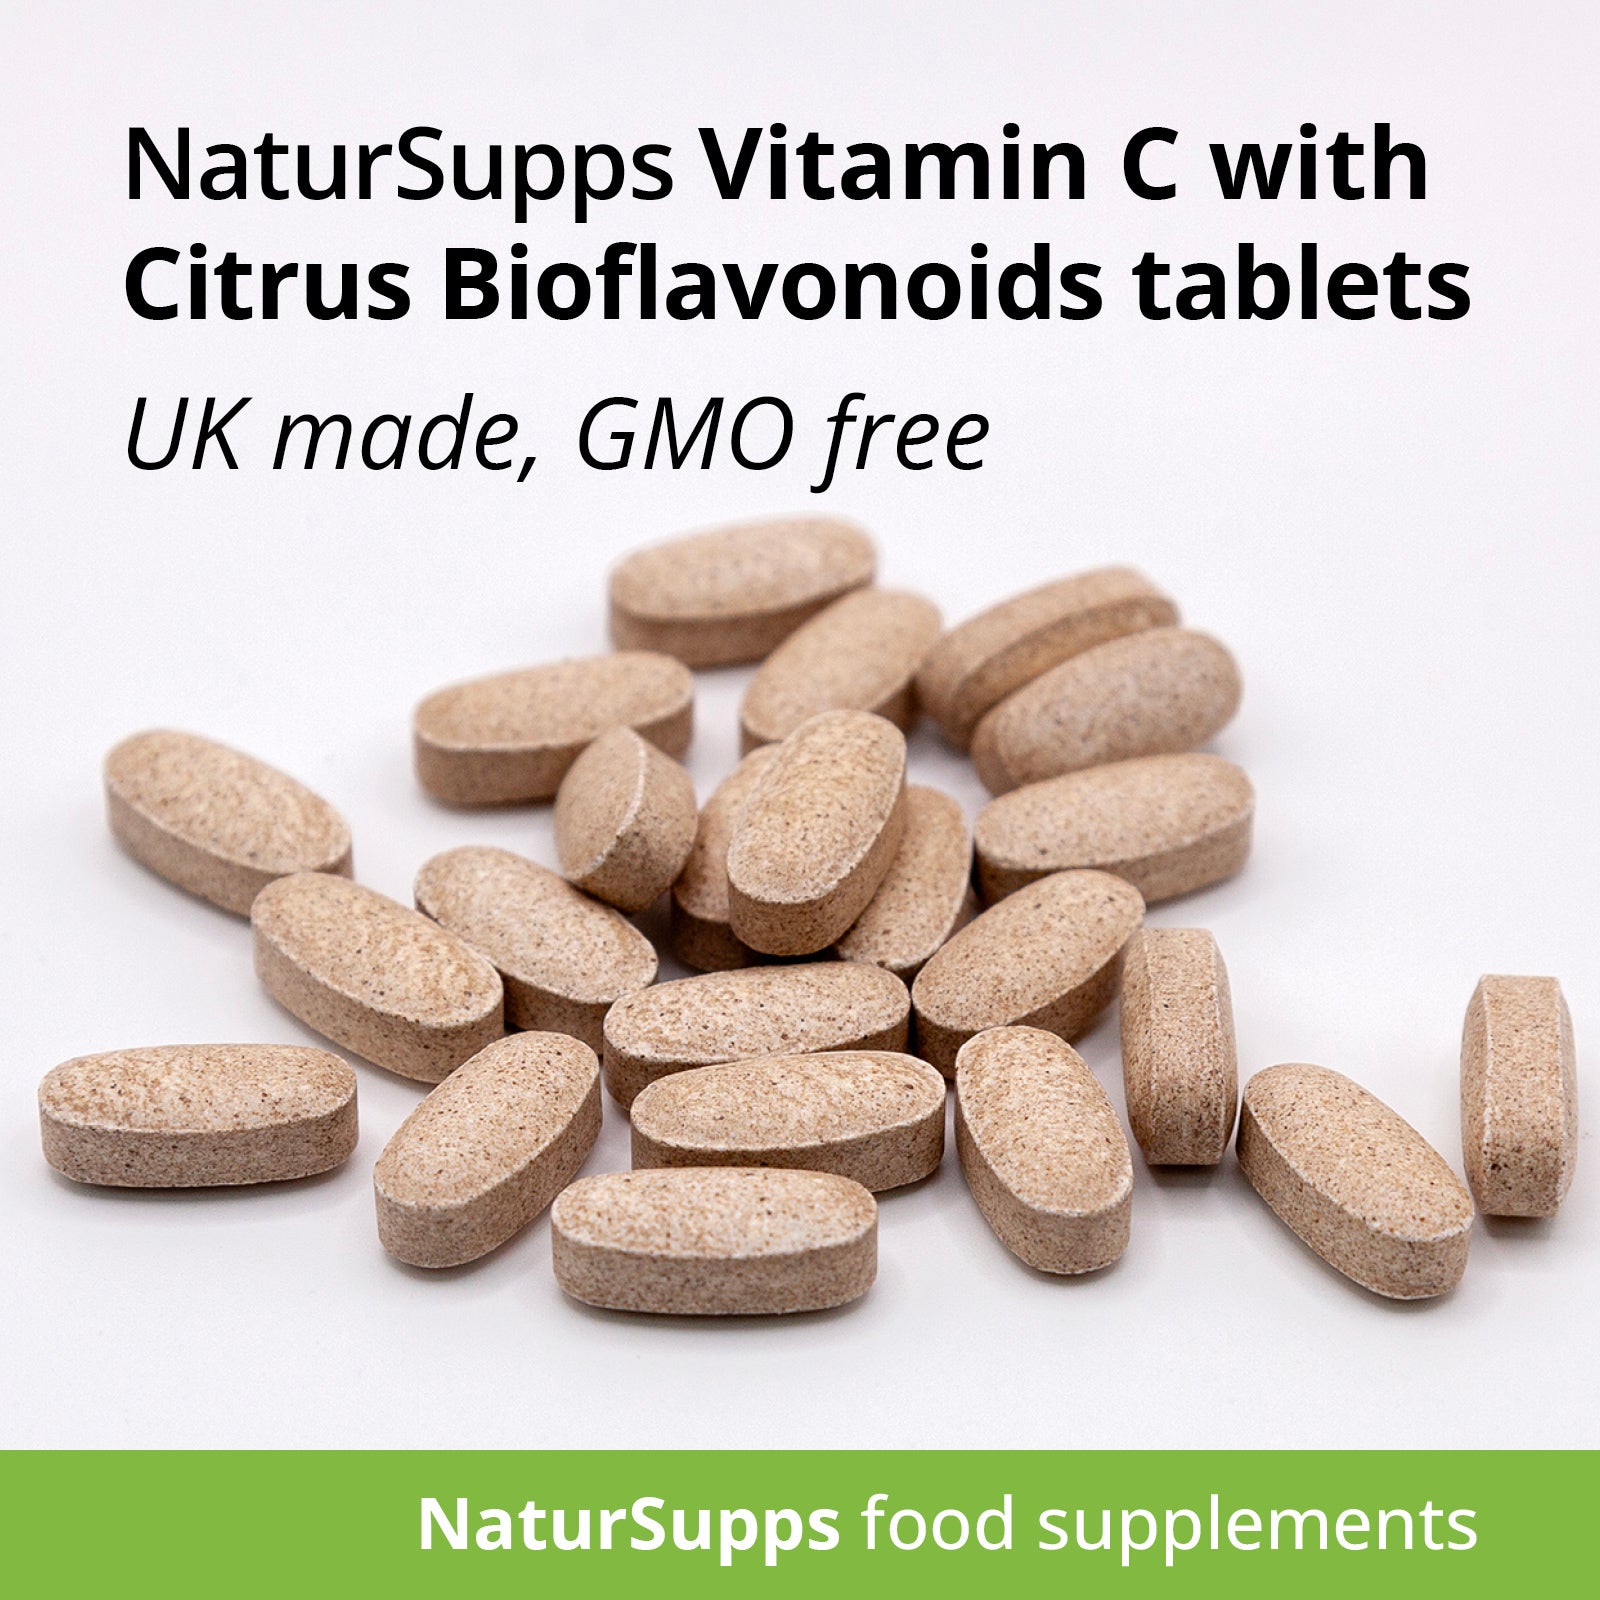 Vitamin C 1000mg Tablets with Bioflavonoids Vegetarian & Vegan Vitamin C Supplement